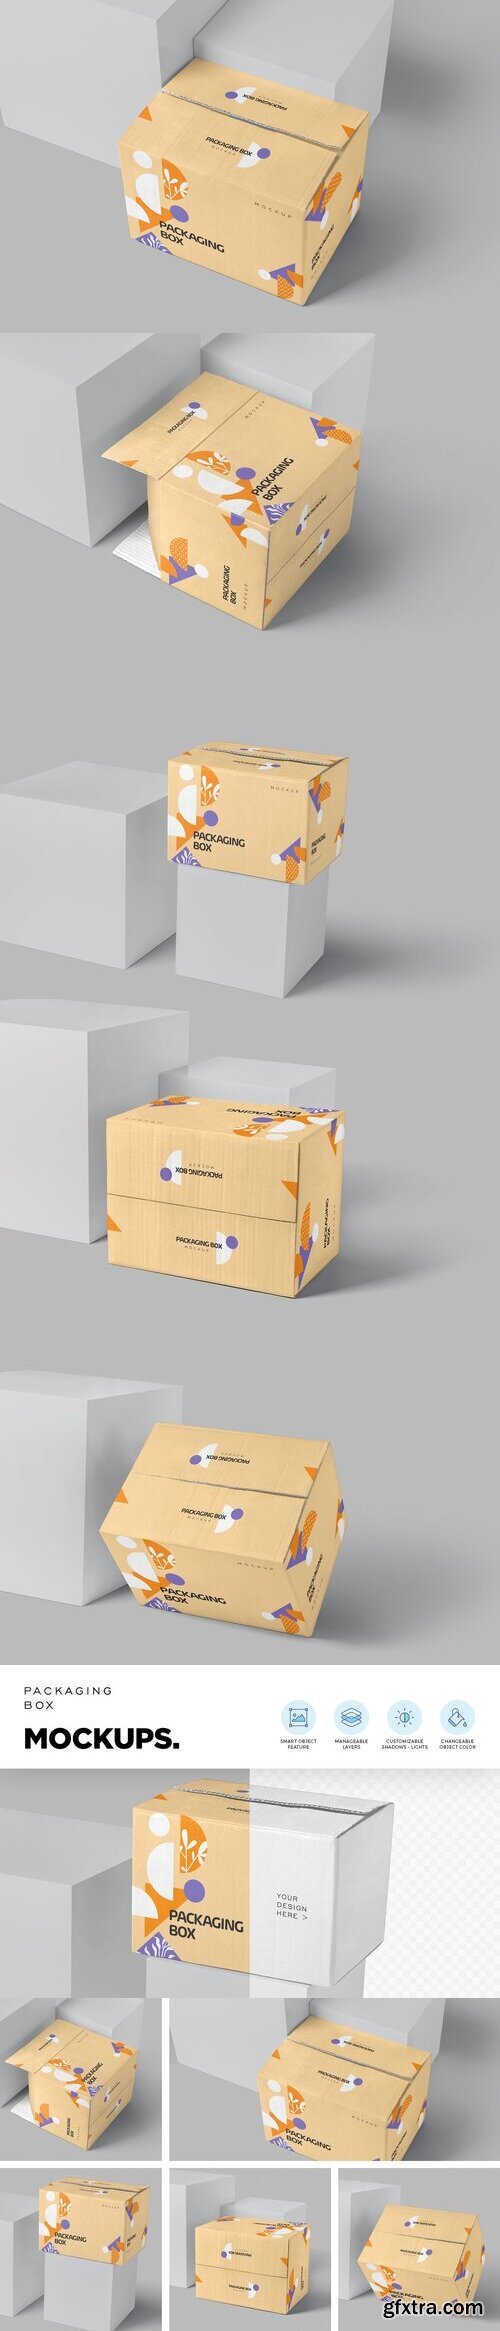 CreativeMarket - Cardboard Packaging Box Mockups 6629755